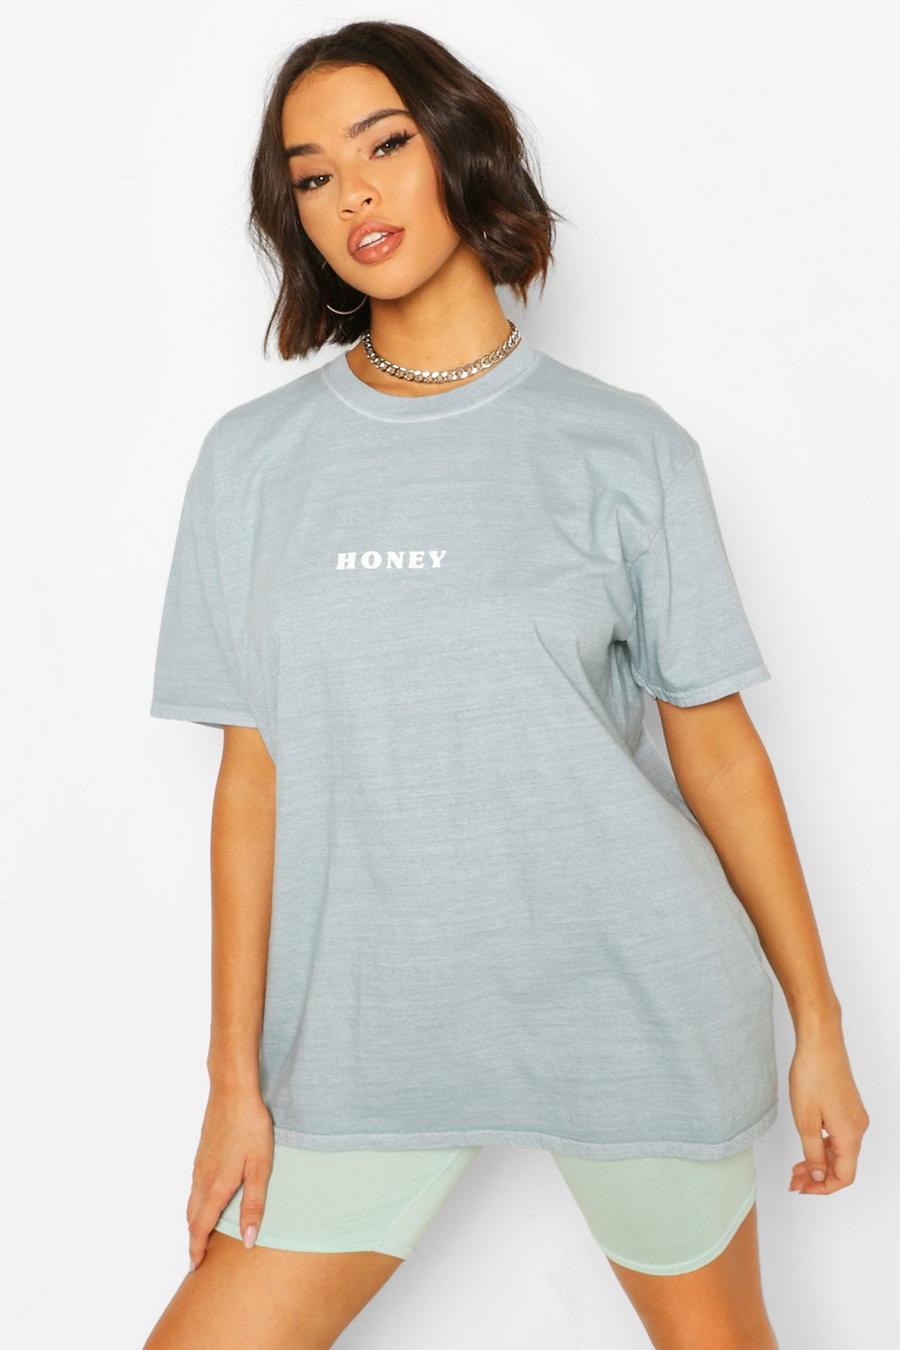 Muntgroen Gebleekt Honey T-Shirt image number 1